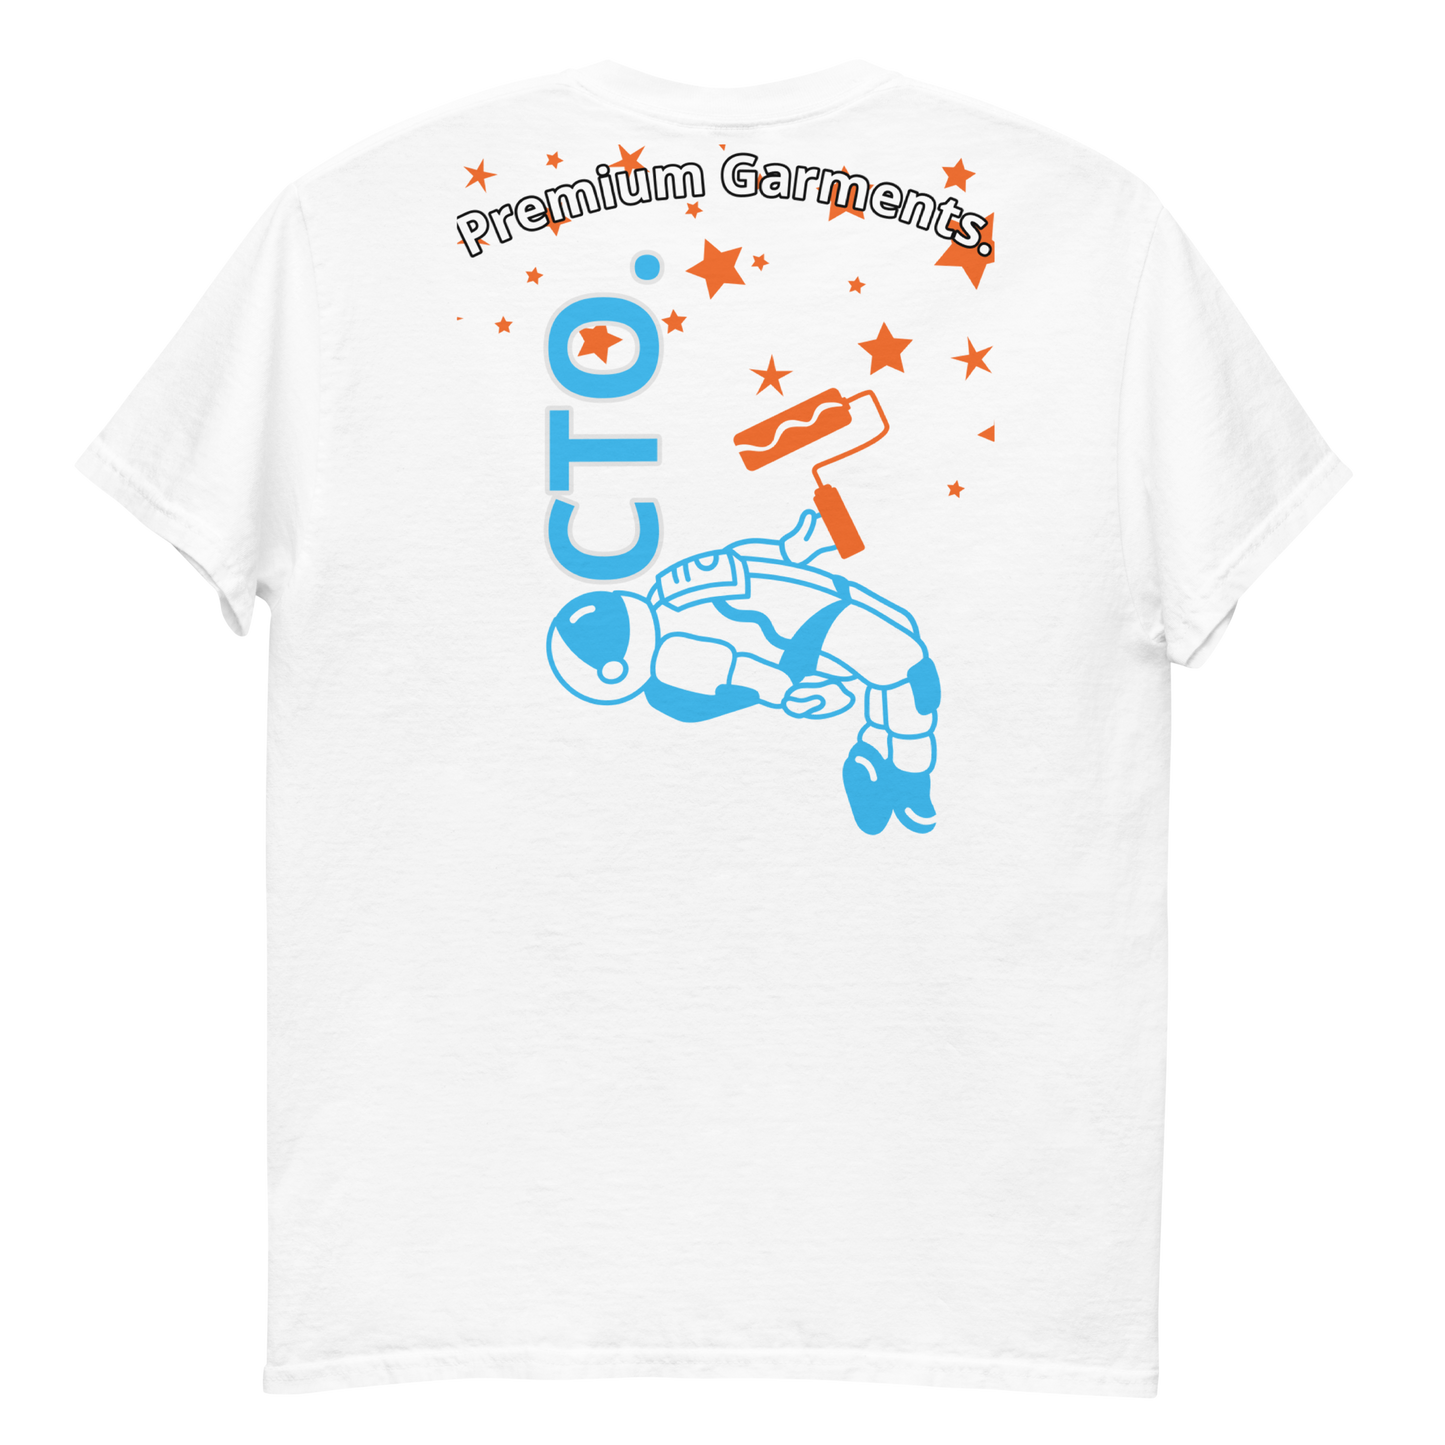 Octo. Mafia "Space race" T-shirt